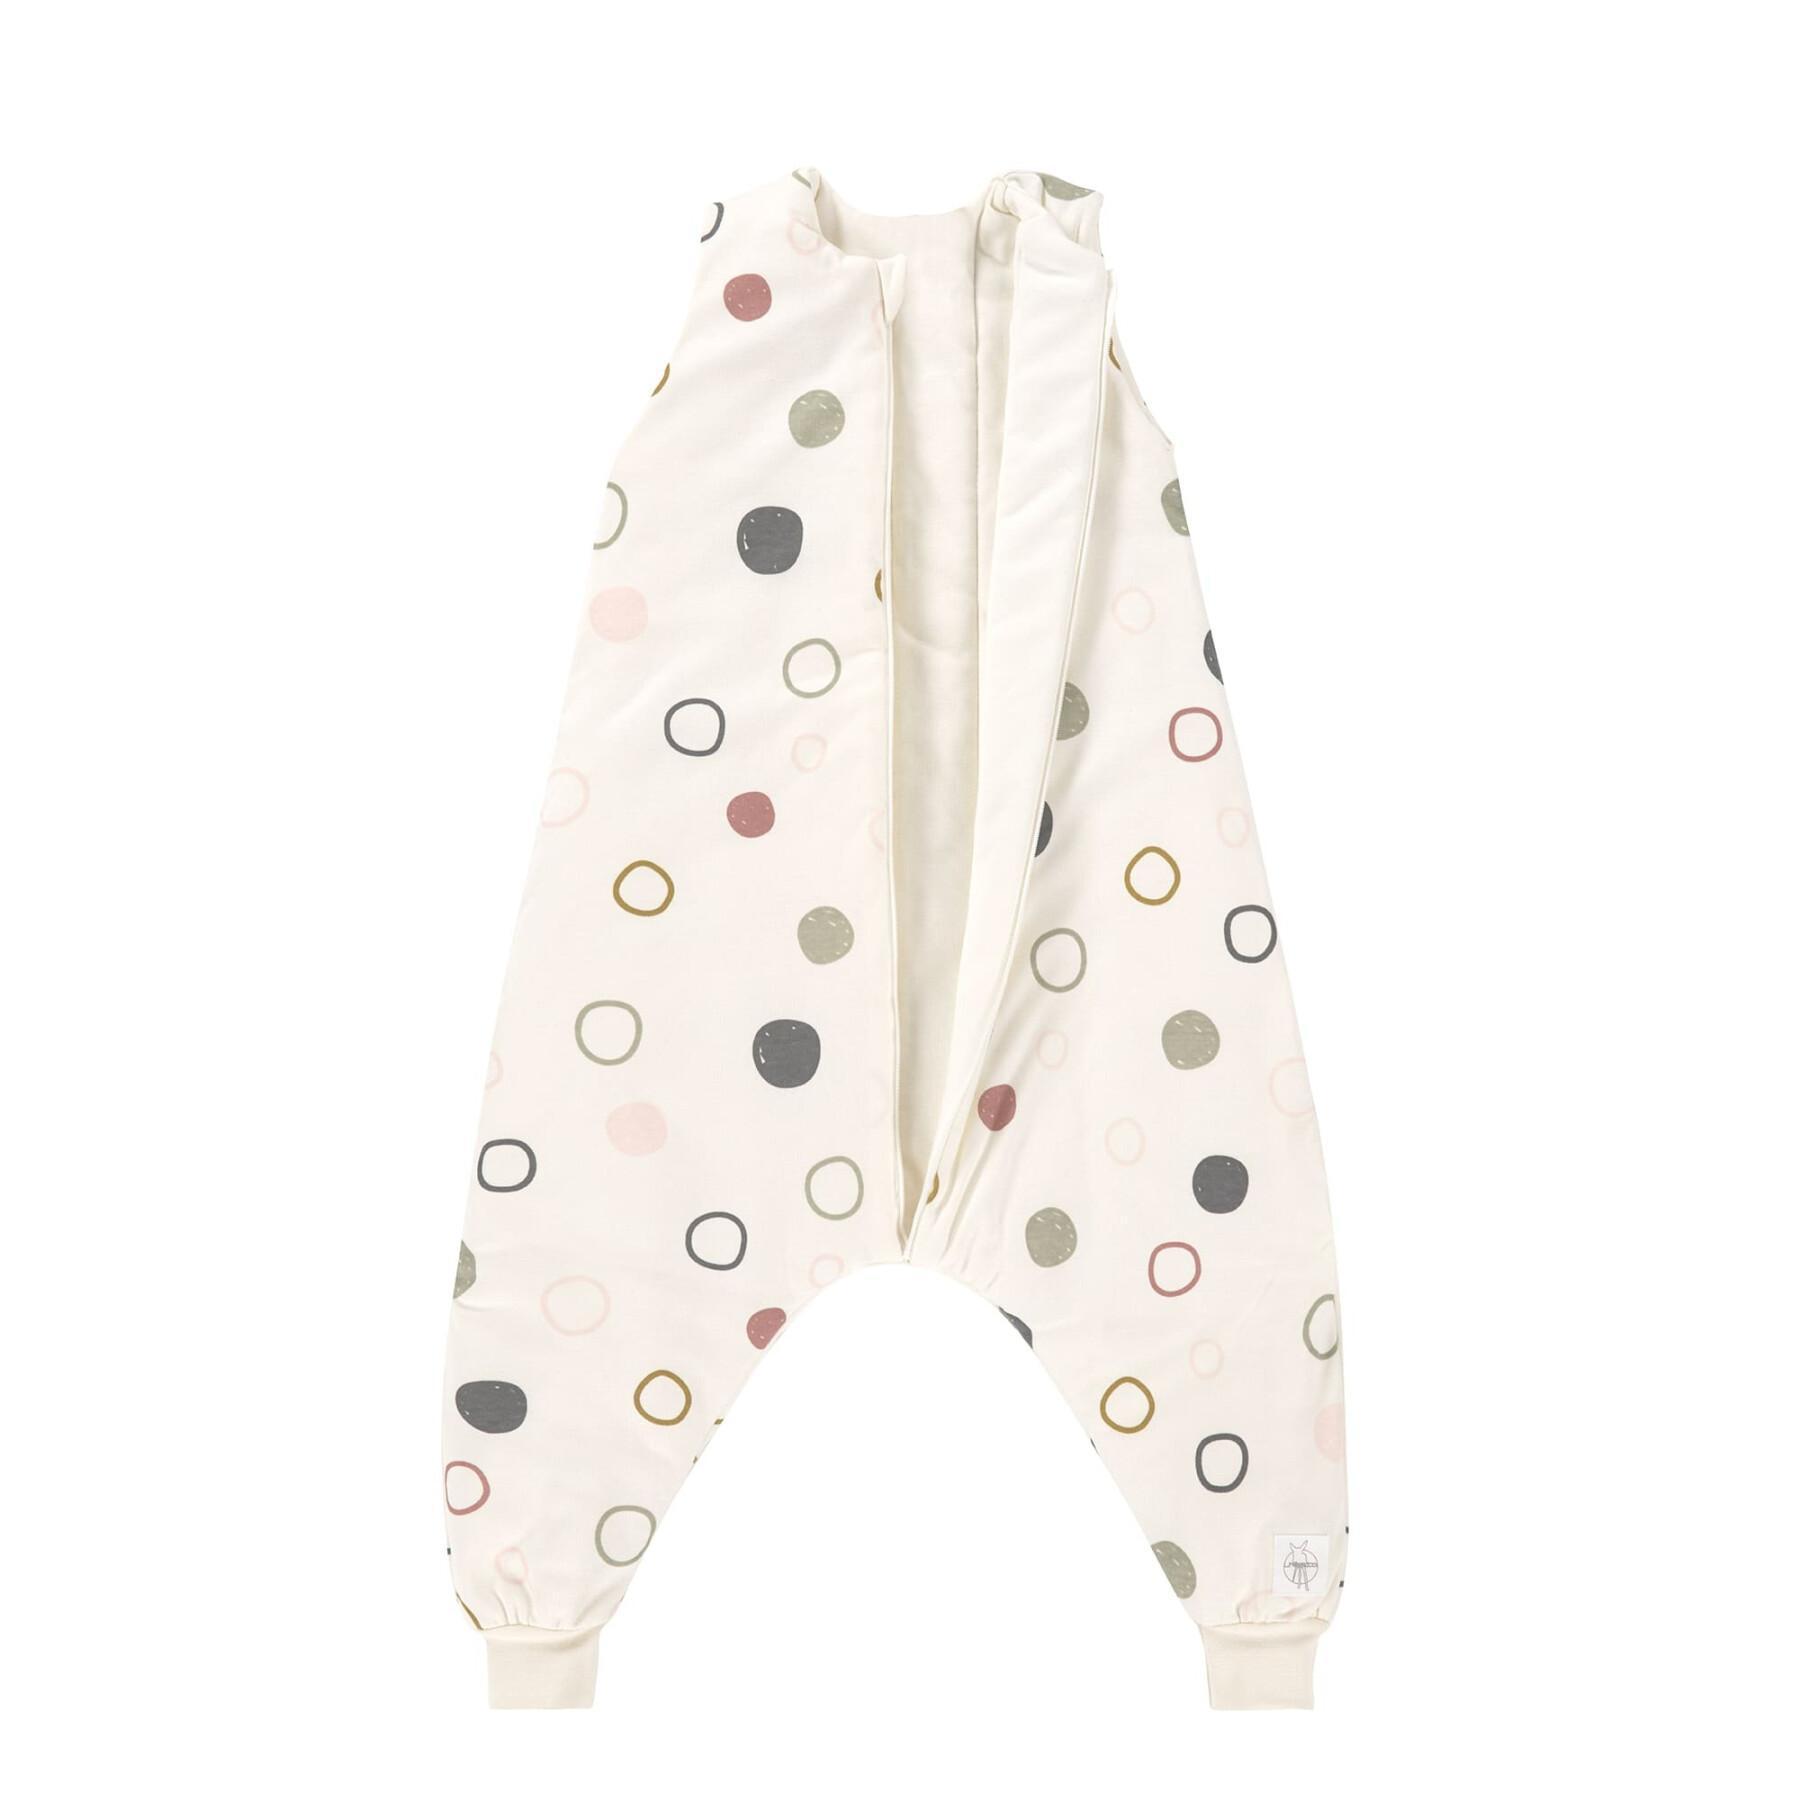 Pijamas combinados para bebés Lässig